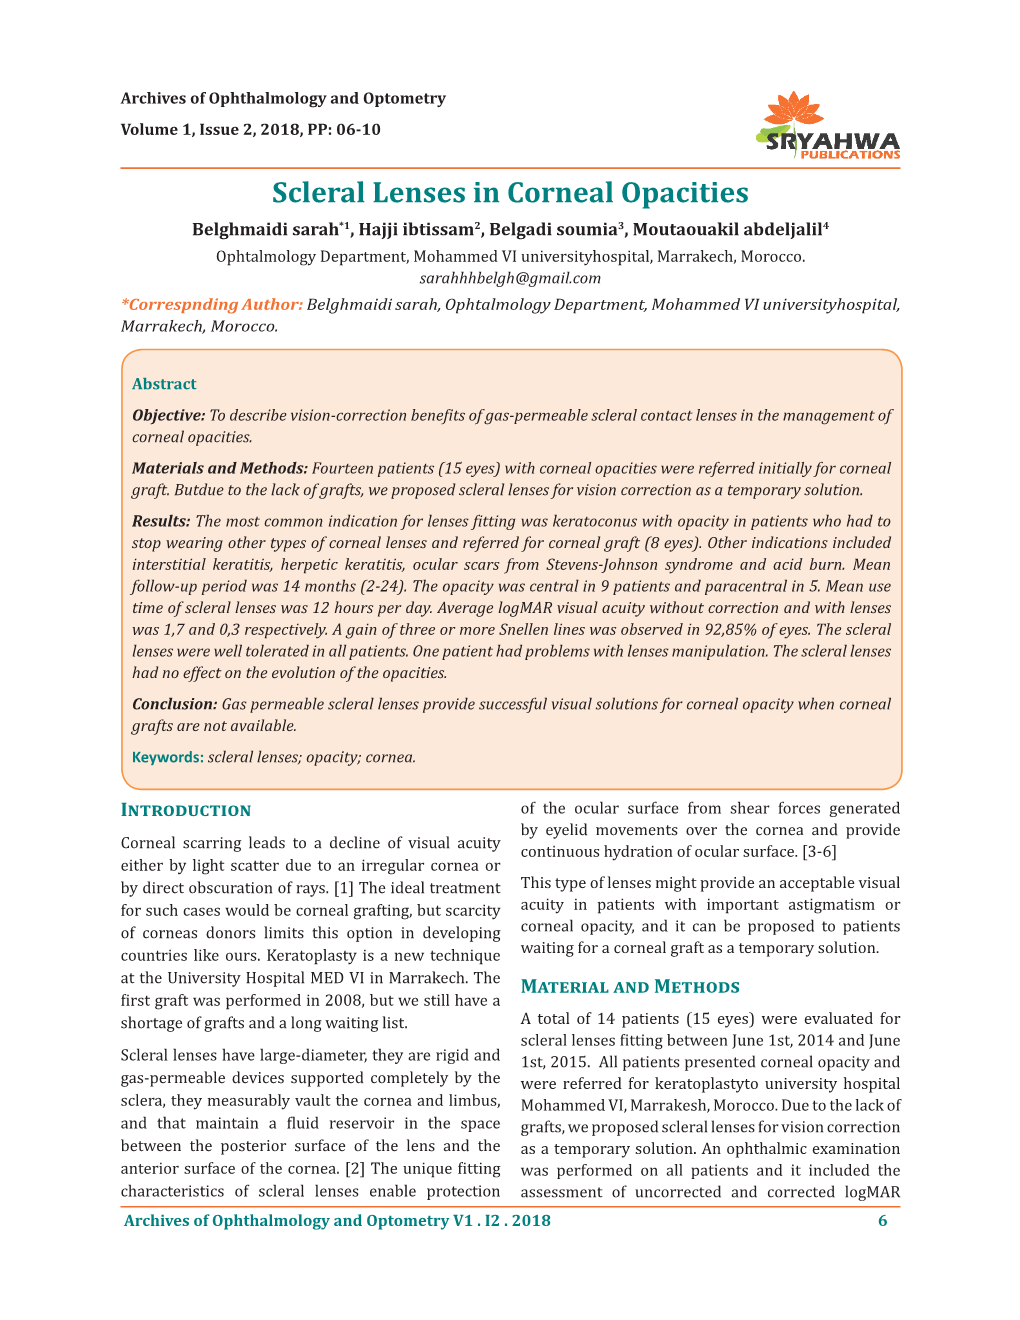 Scleral Lenses in Corneal Opacities